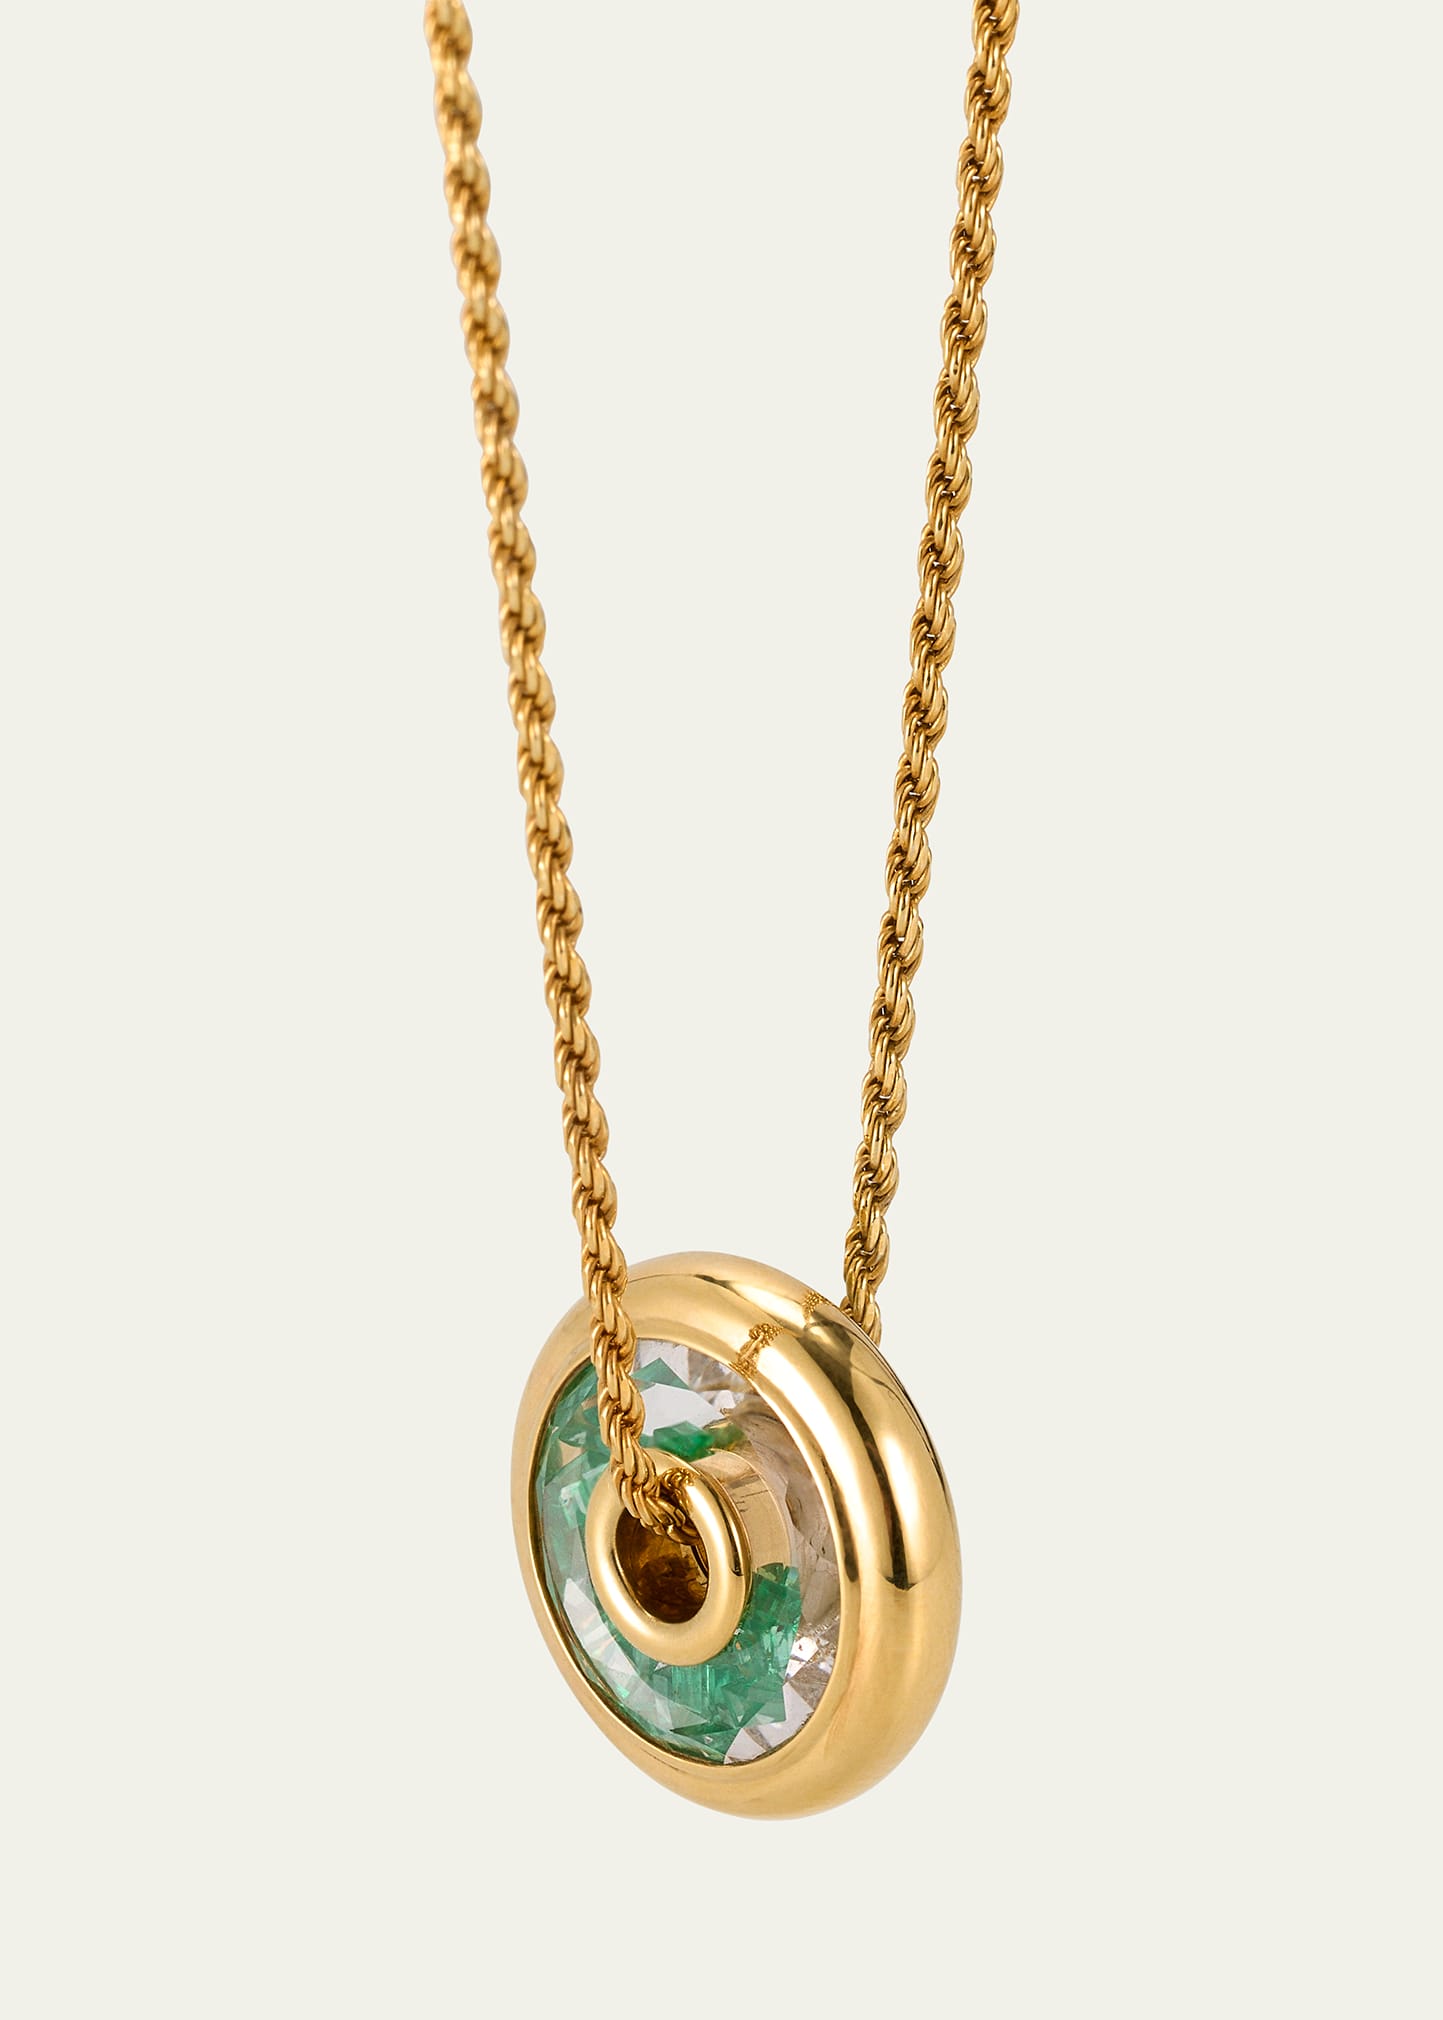 Moritz Glik 18k Yellow Gold Roda 15 Pendant Necklace With Emeralds